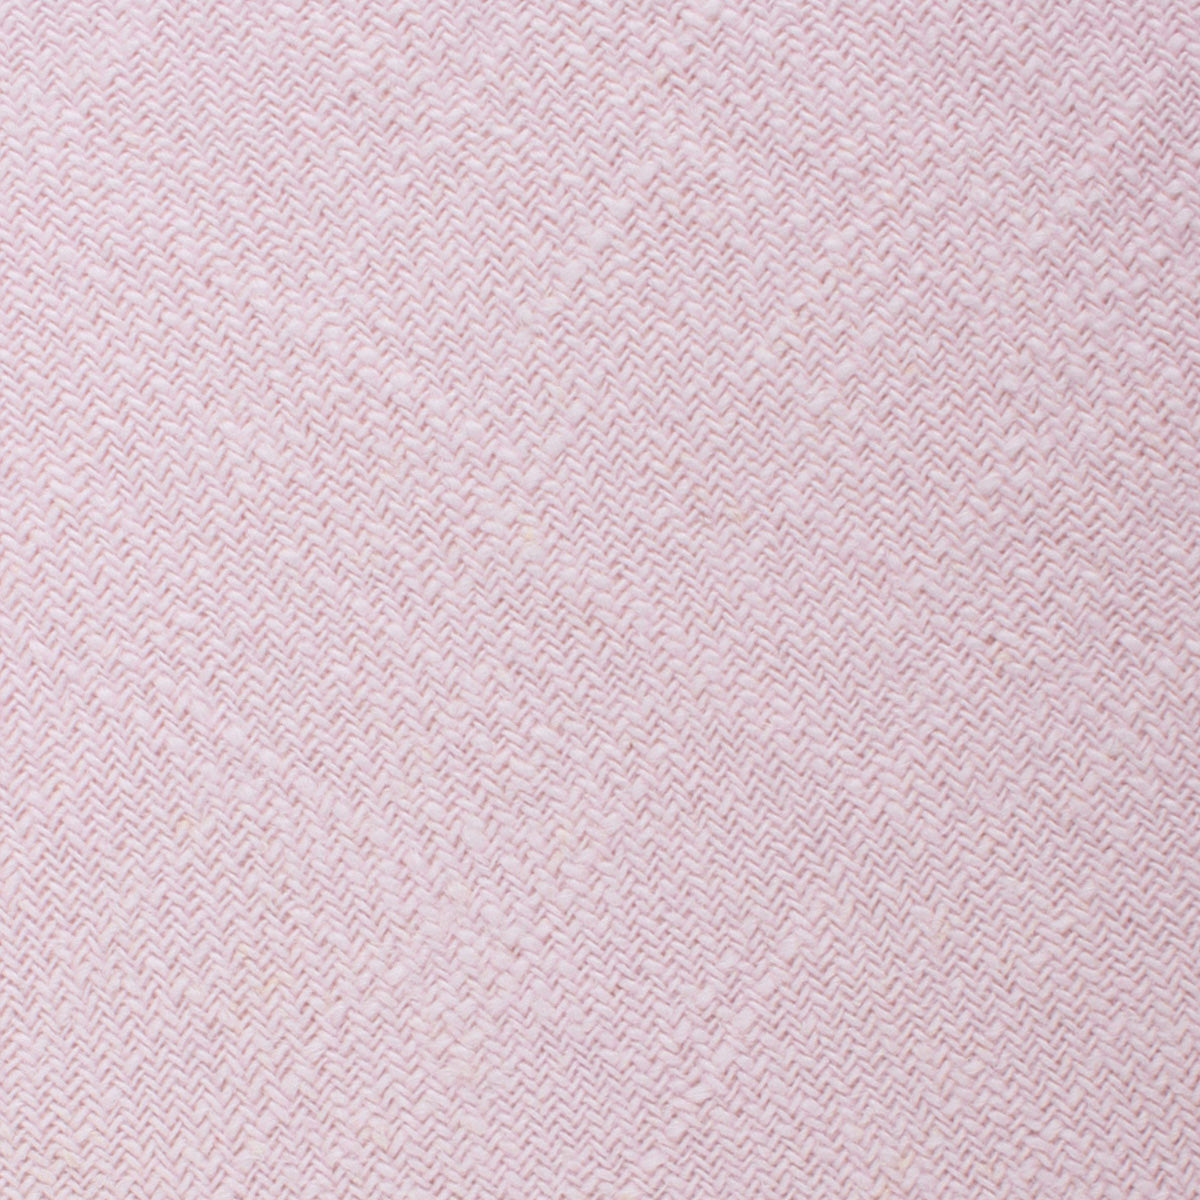 Maldivian Blush Pink Linen Bow Tie Fabric